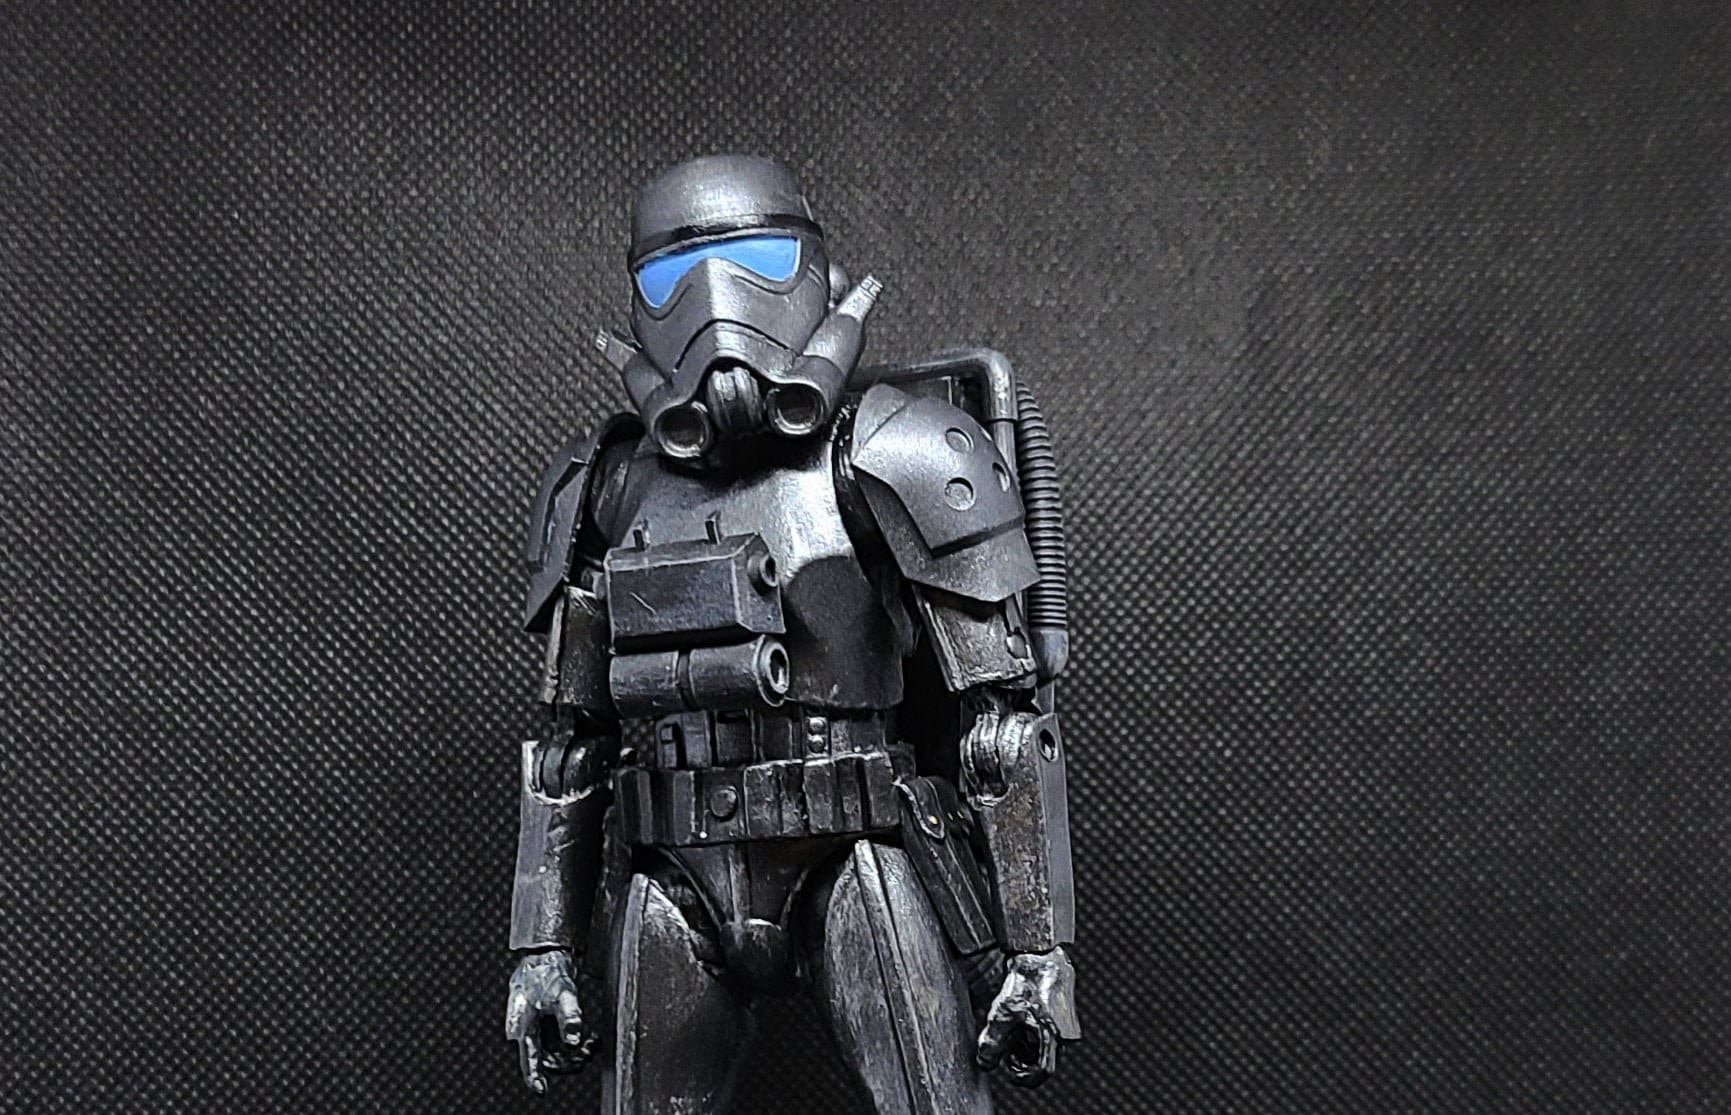 Stormtrooper Armor Concept